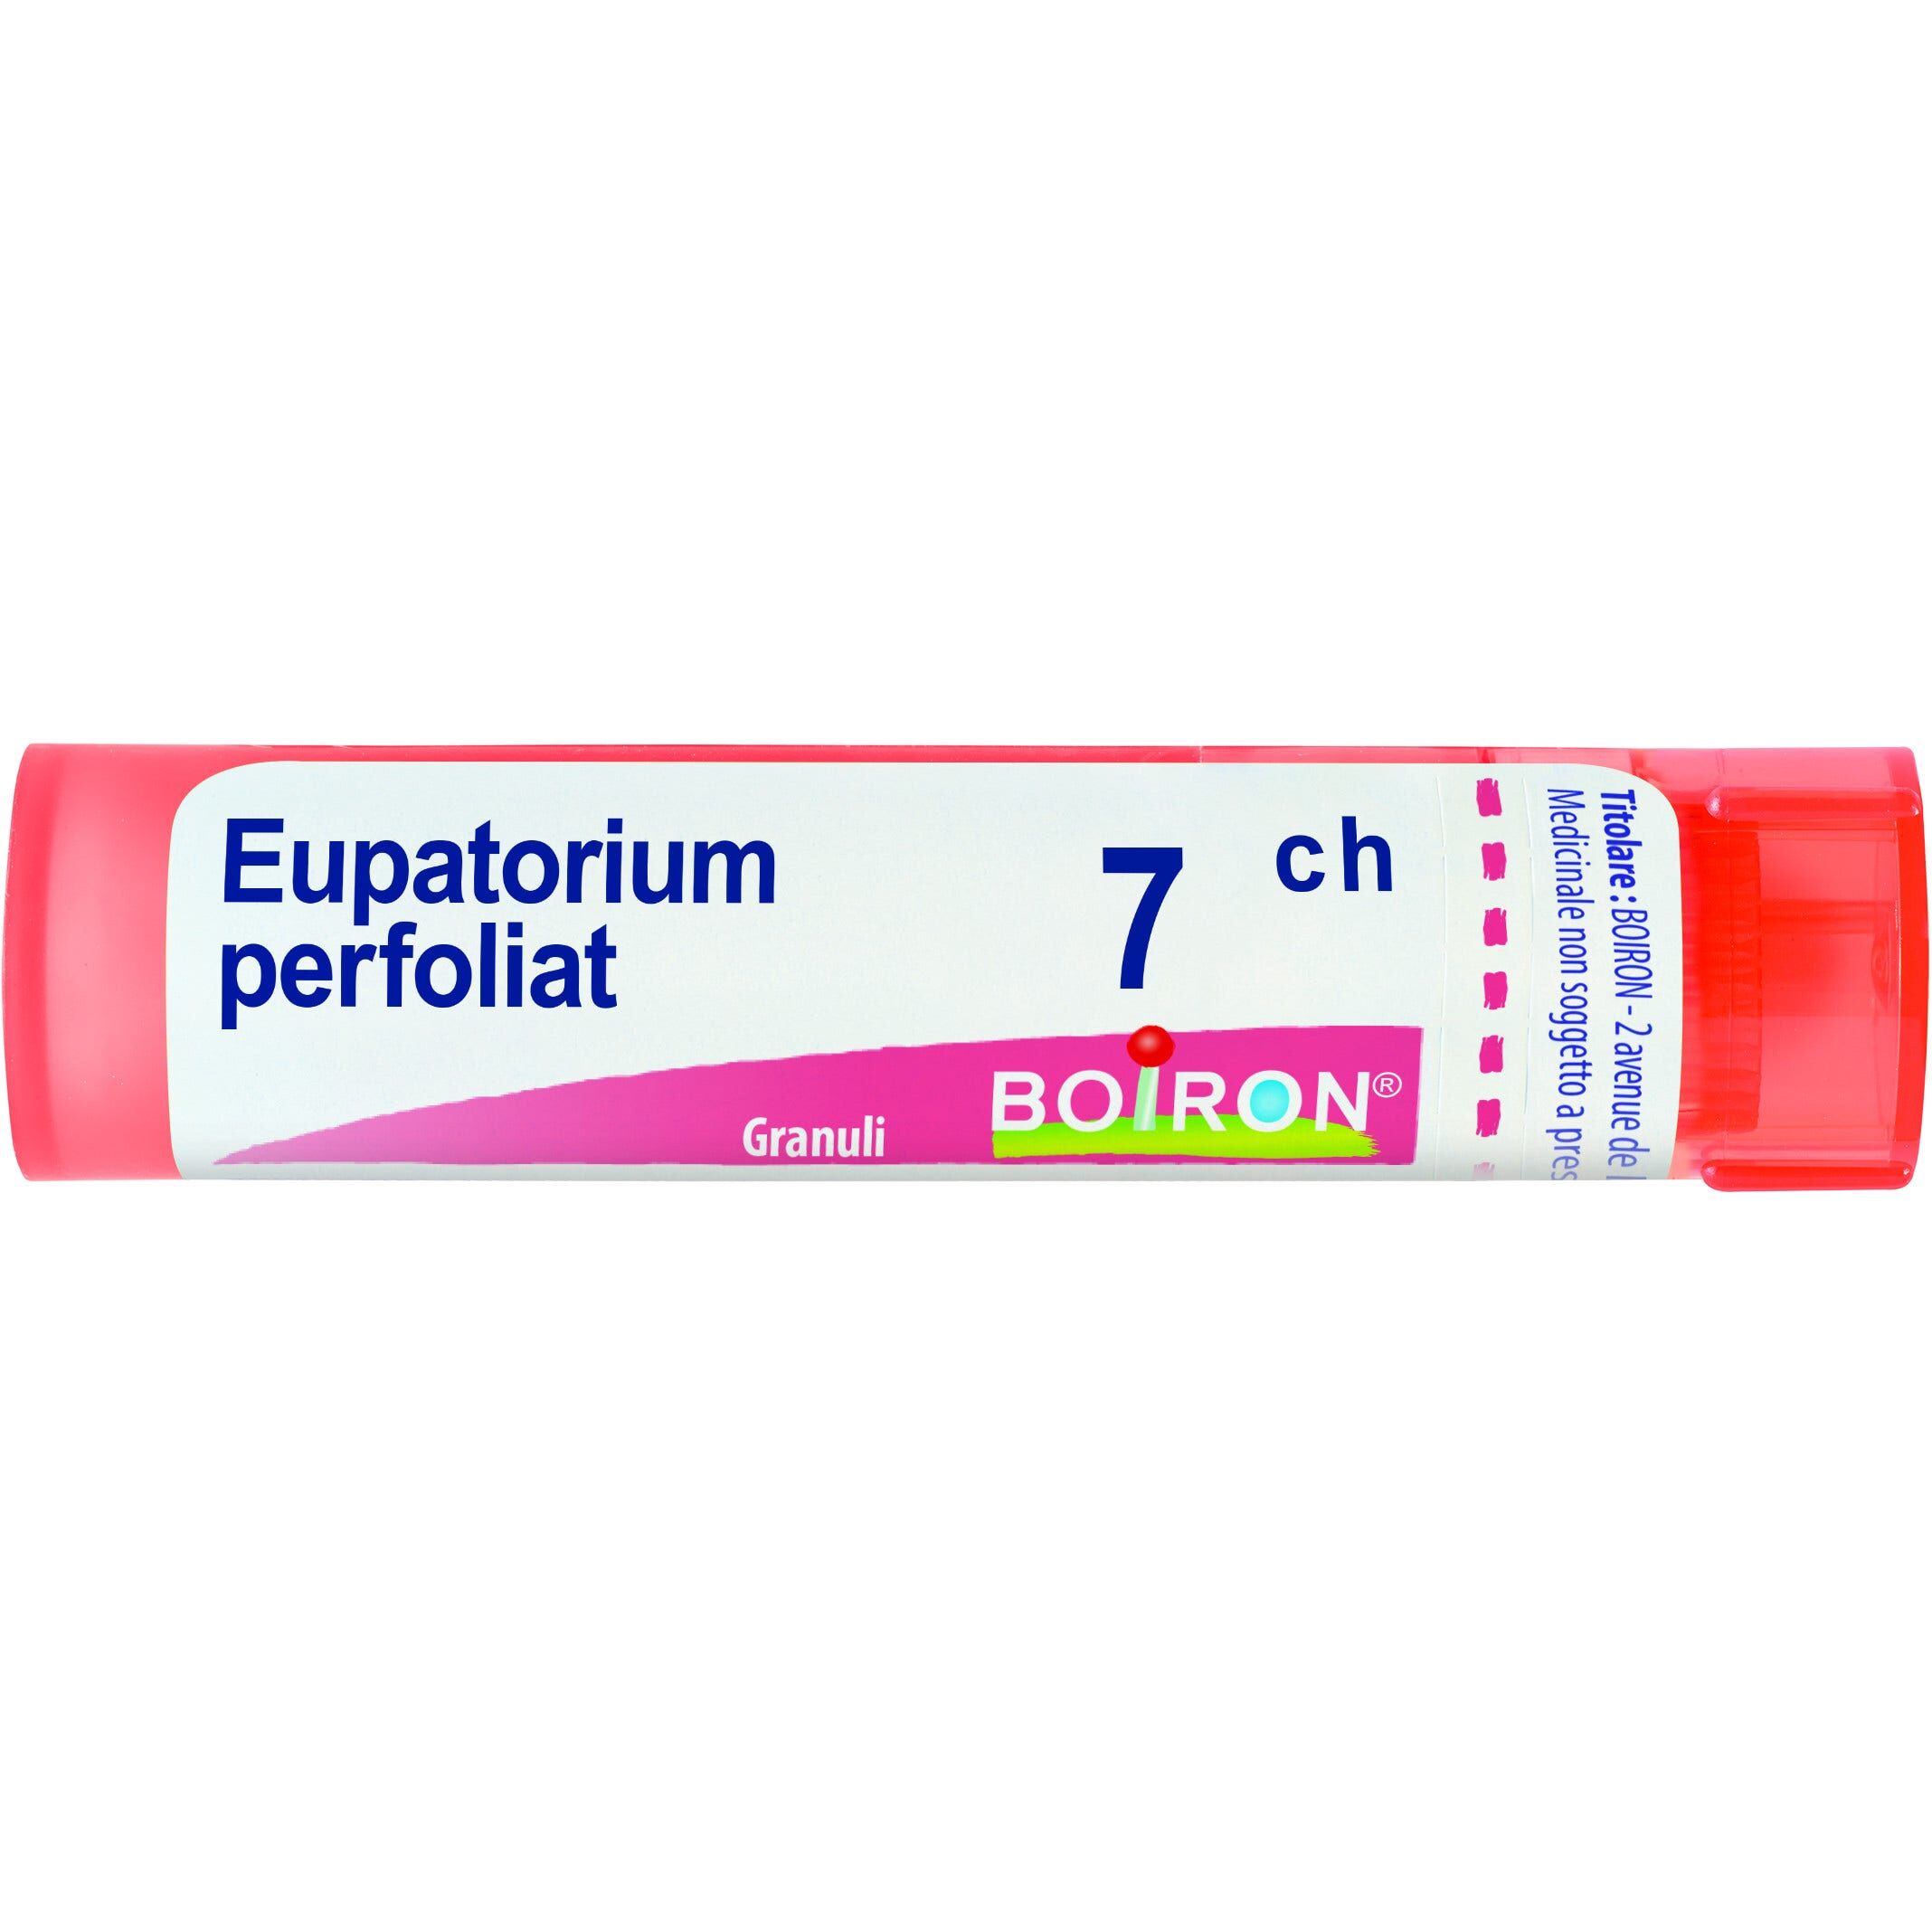 Boiron Eupatorium Perfoliatum 7 Ch 80 Granuli